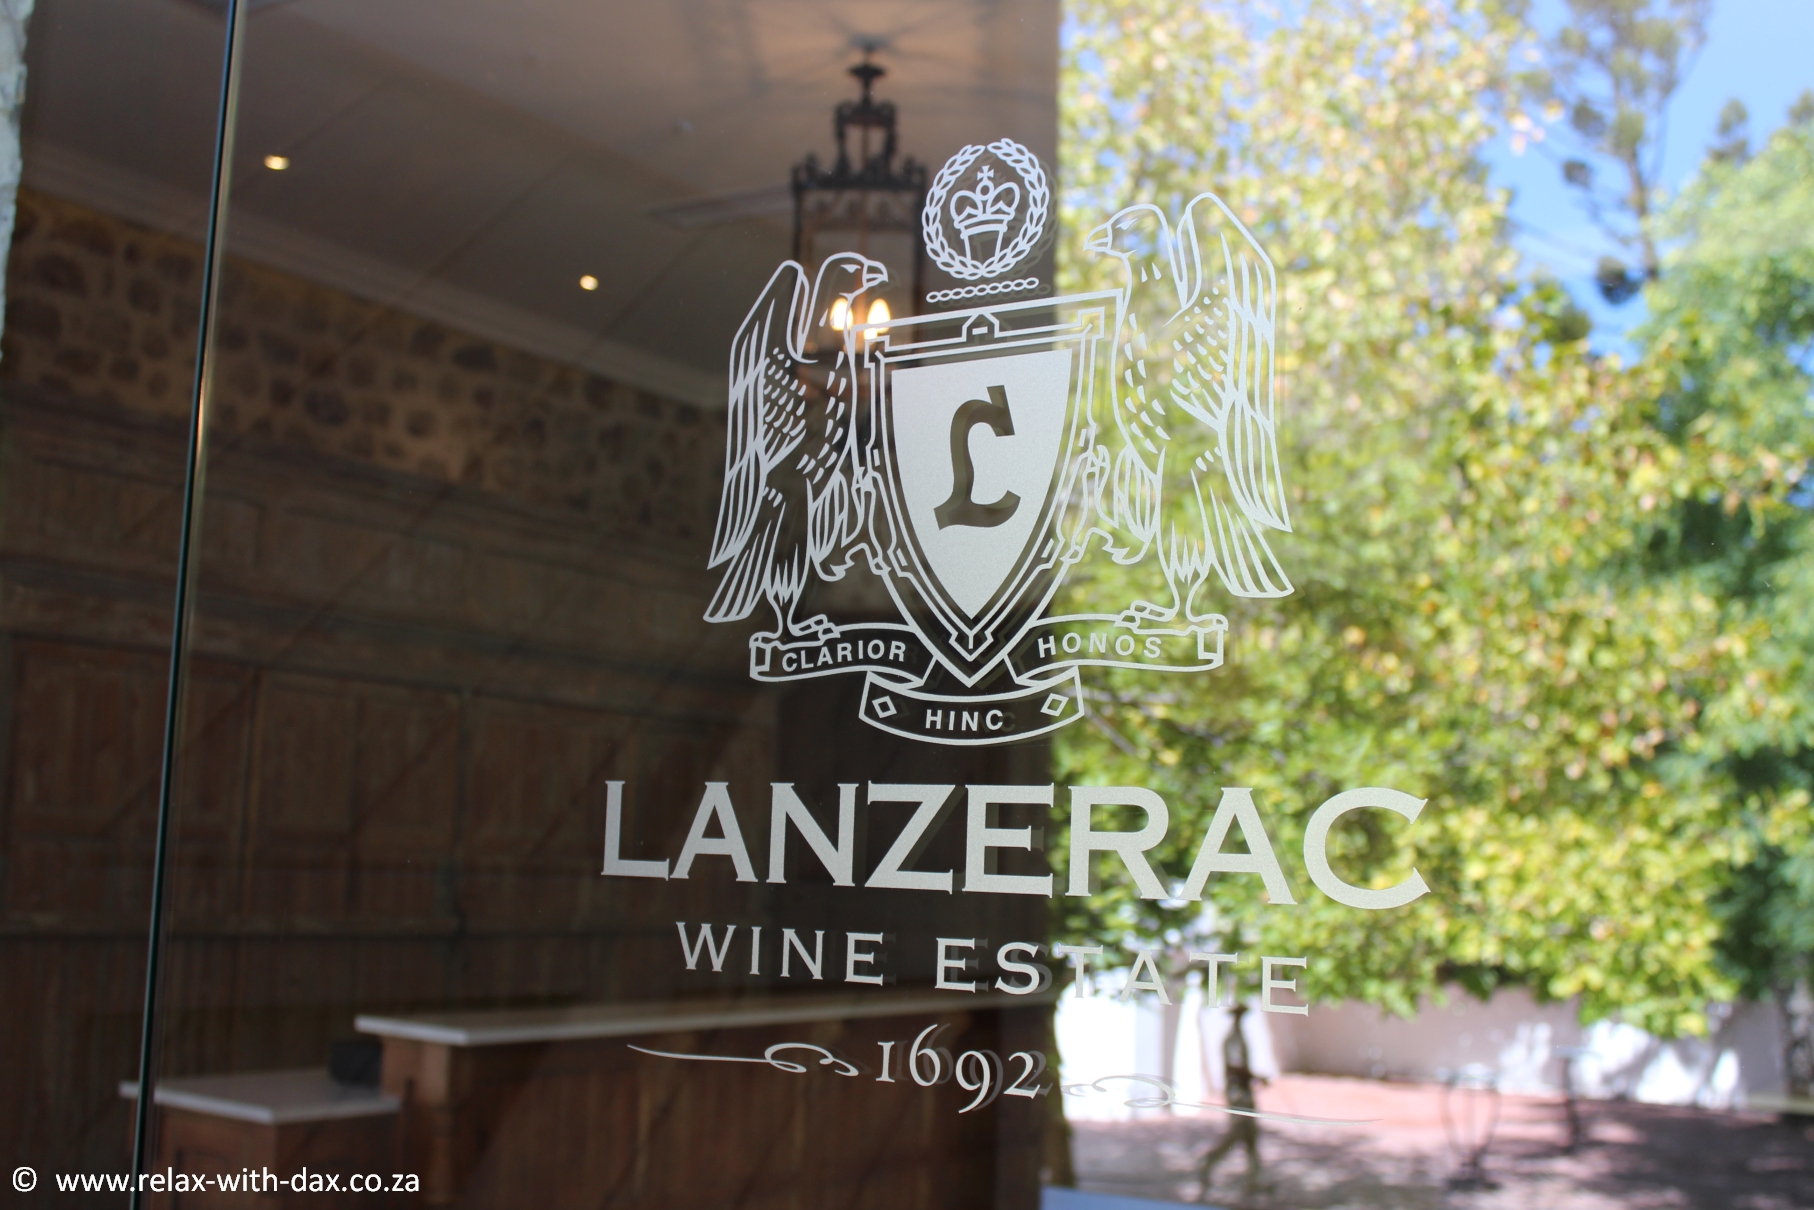 Lanzerac wine estate